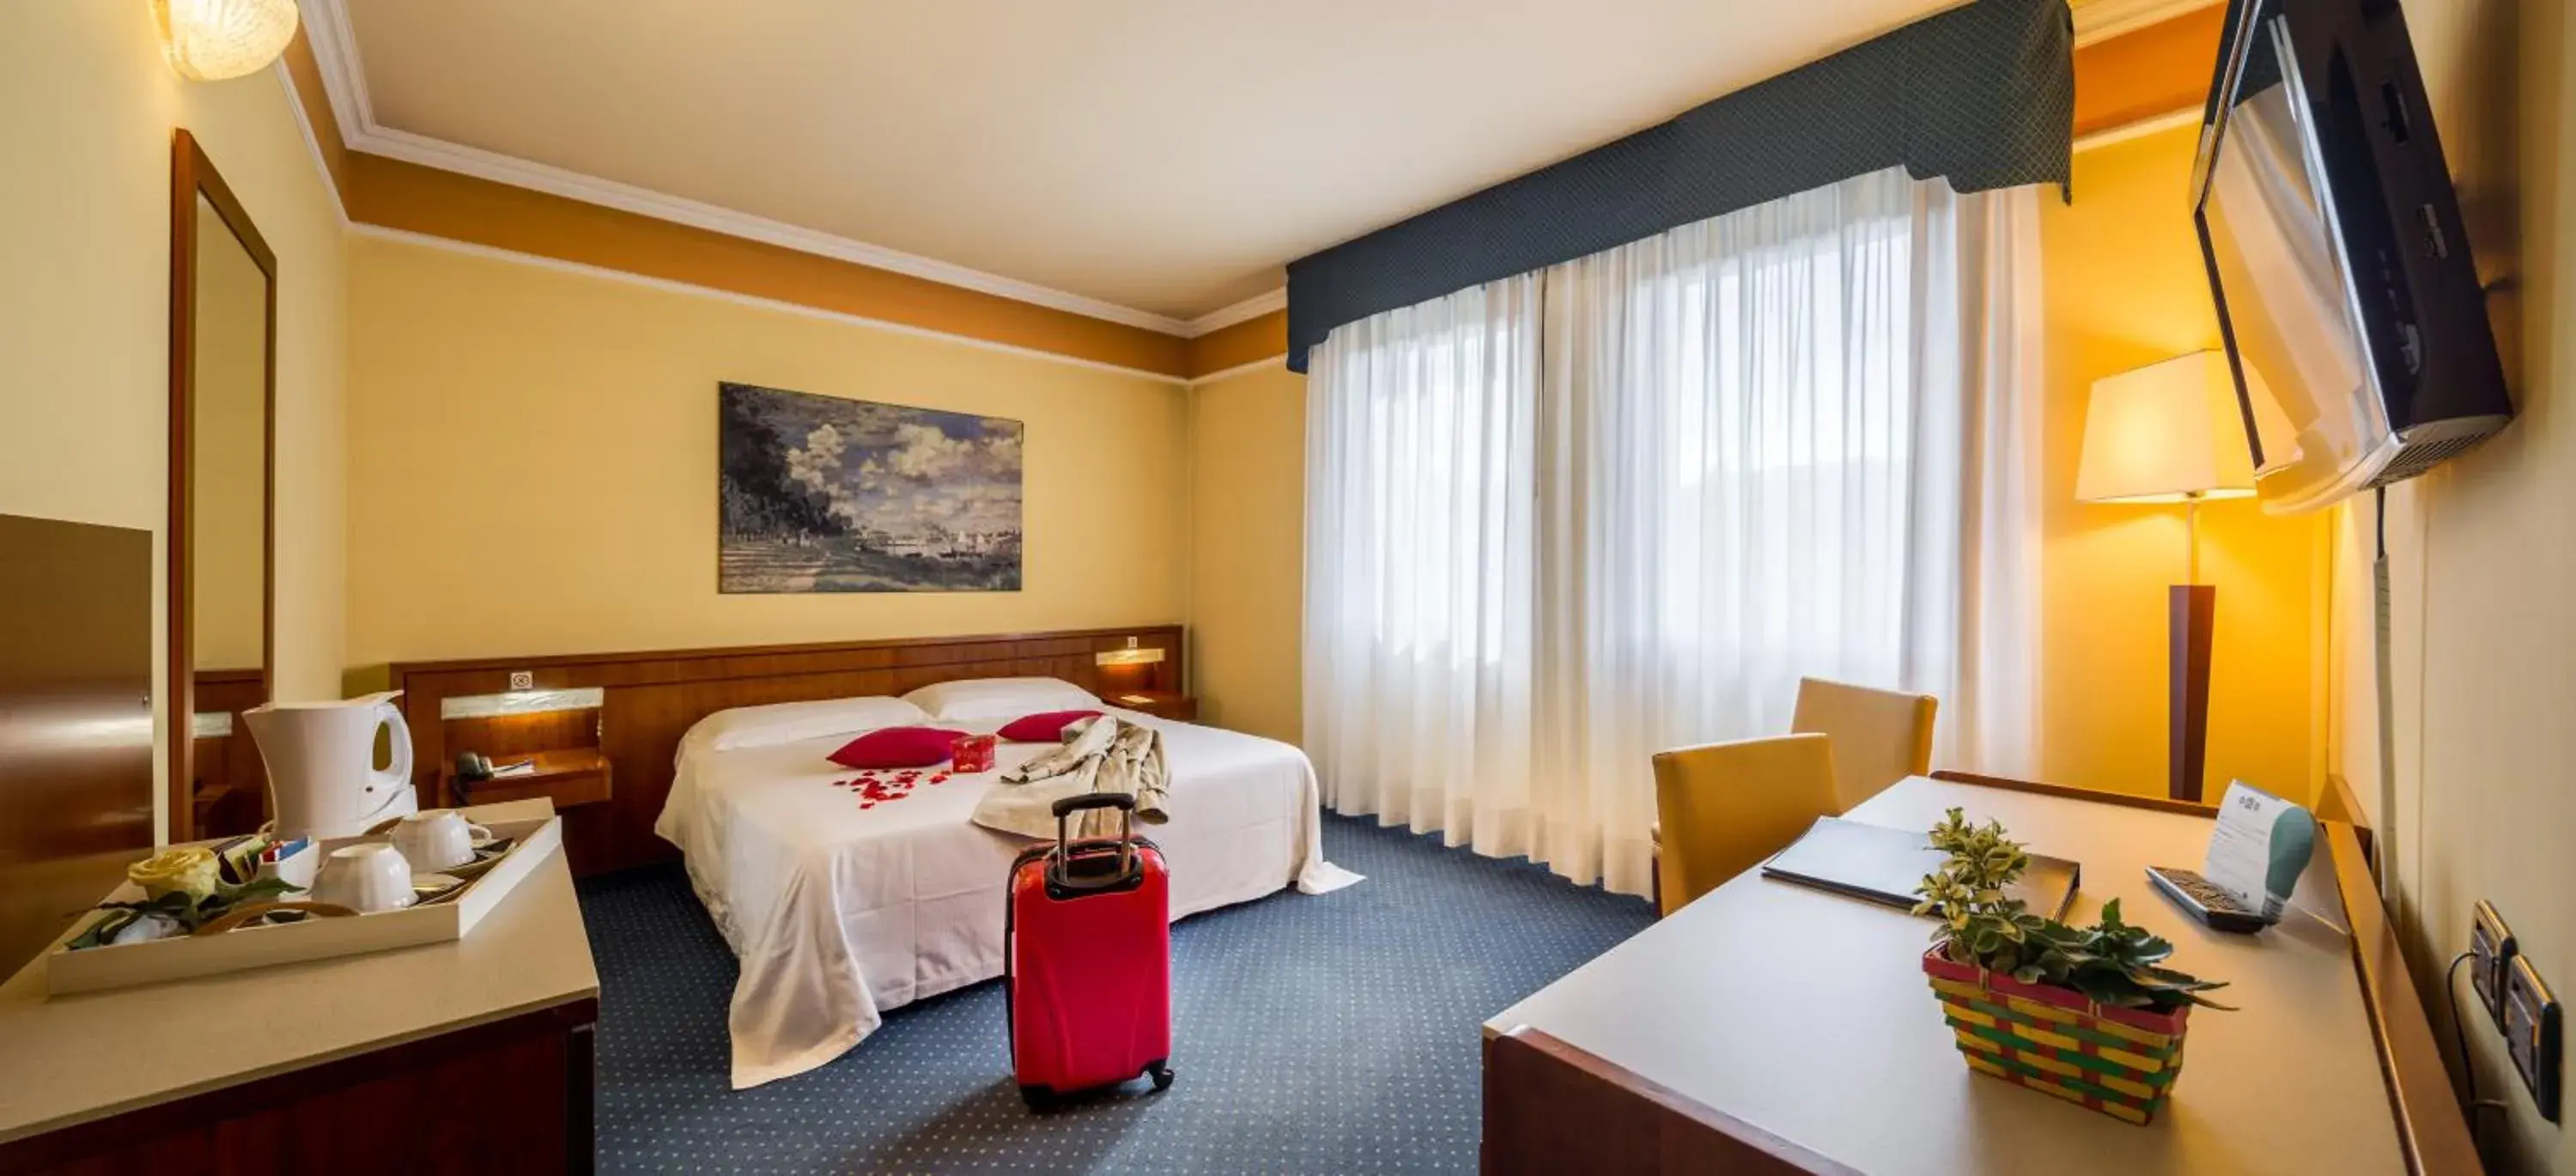 Bedroom in iH Hotels Padova Admiral